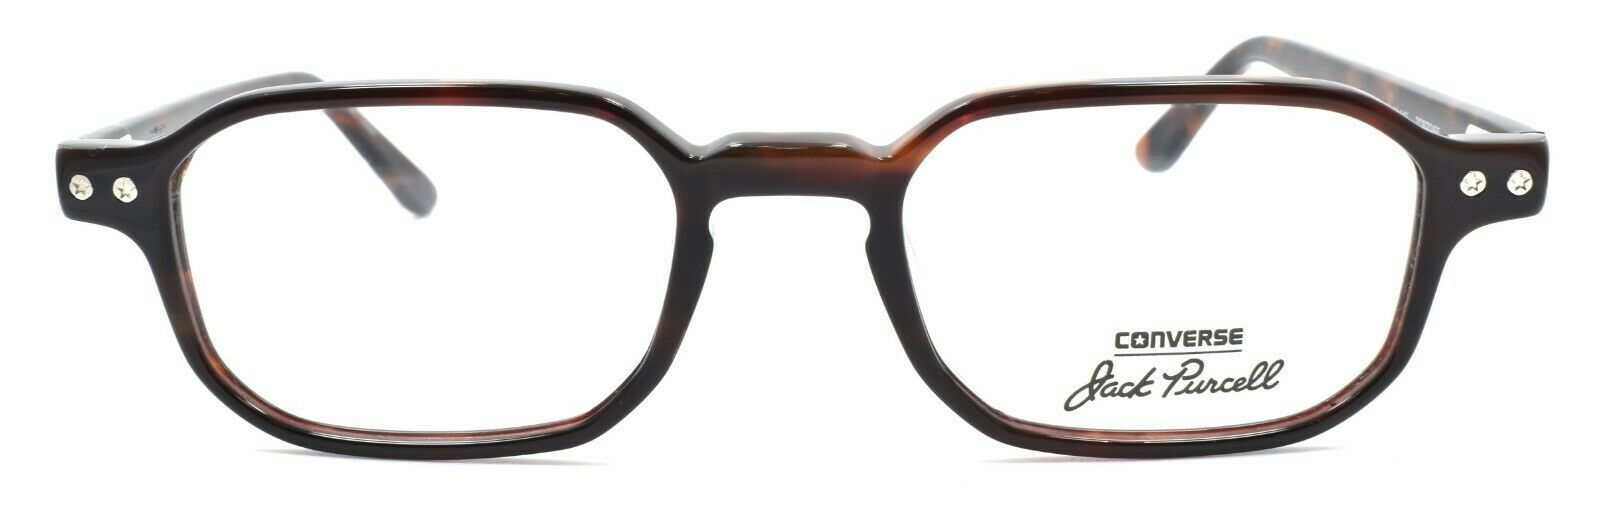 2-CONVERSE Jack Purcell P001 UF Men's Eyeglasses Frames 49-19-145 Brown-751286260441-IKSpecs